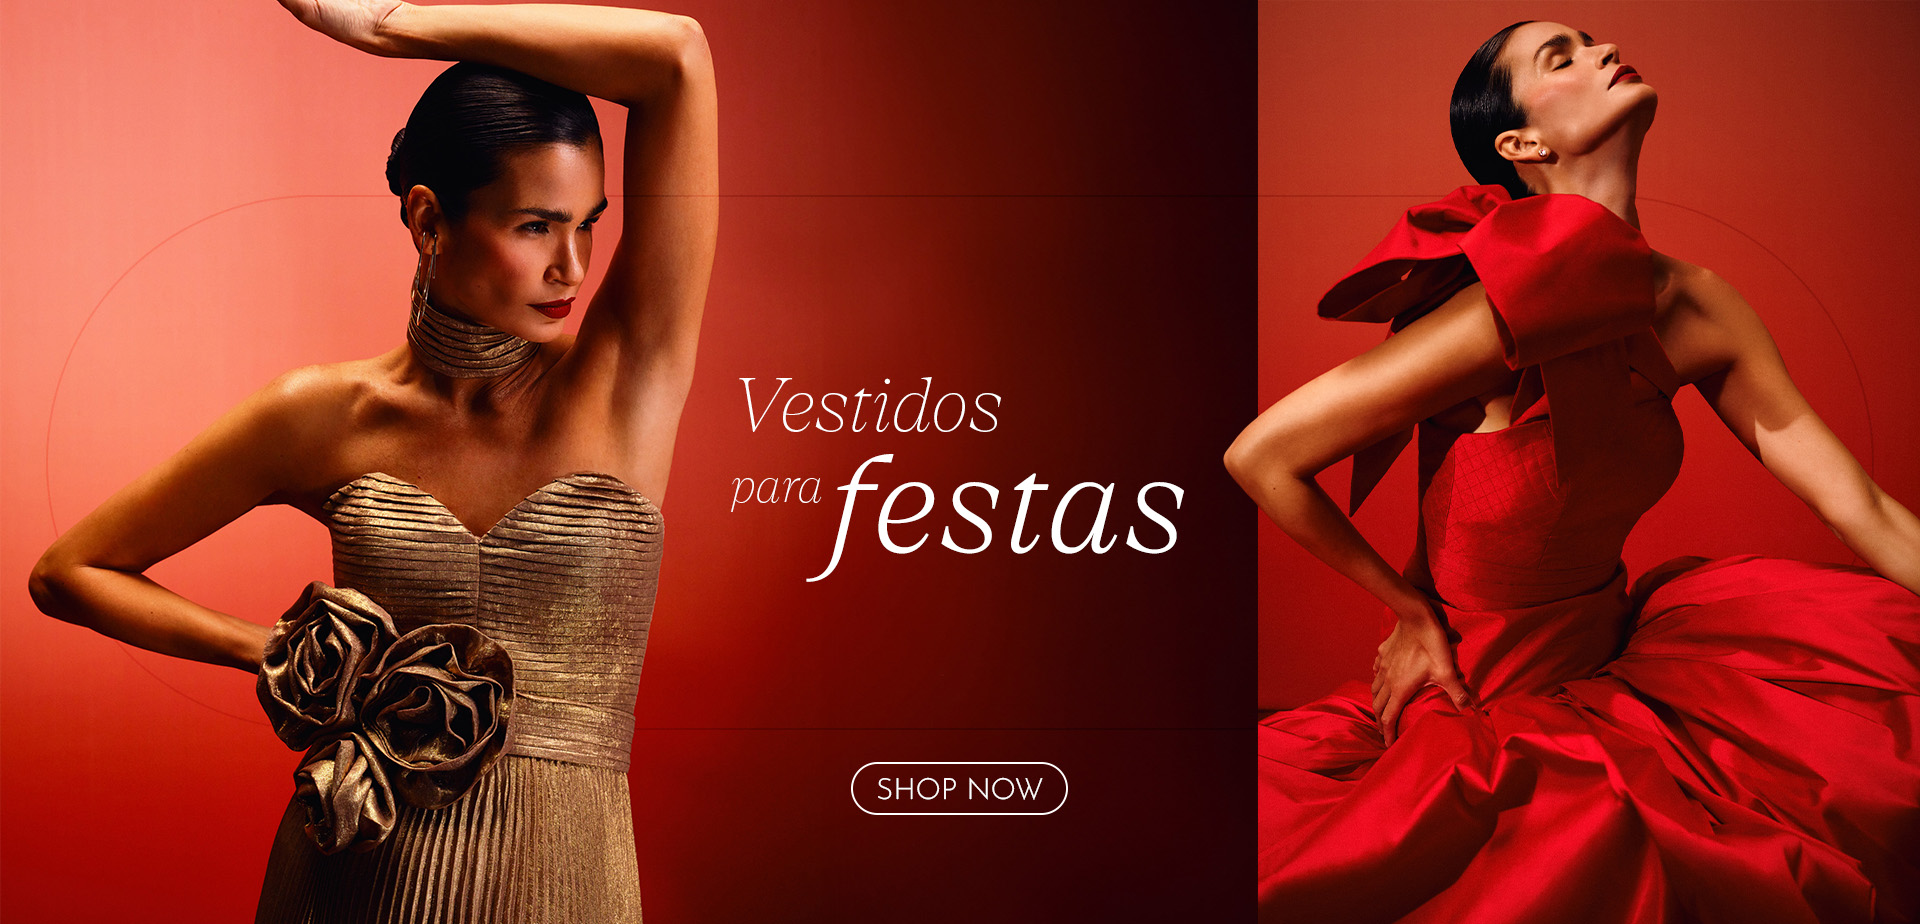 Vestidos Festa desktop